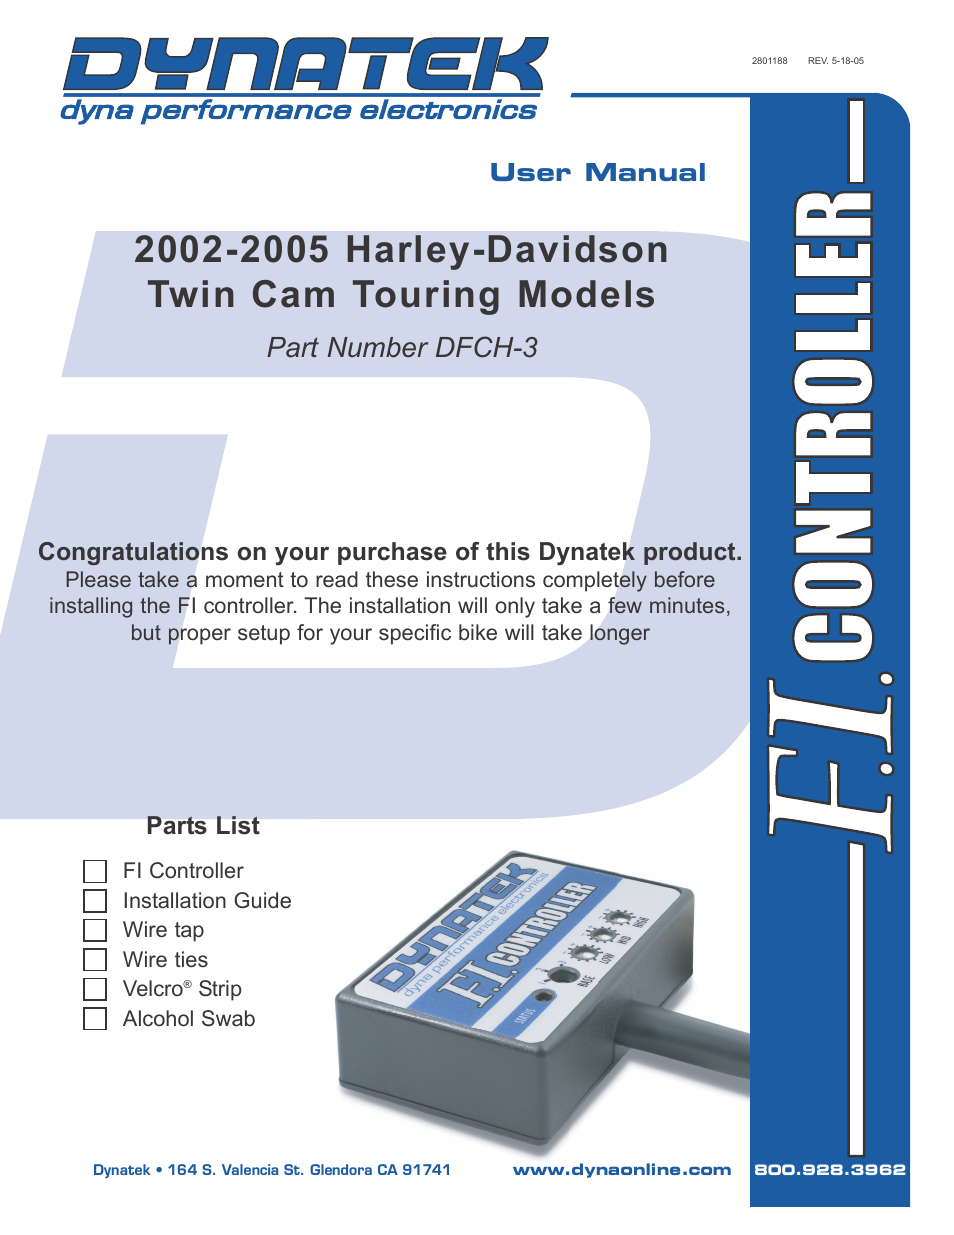 2002-2005 Harley-Davidson Twin Cam Touring Models